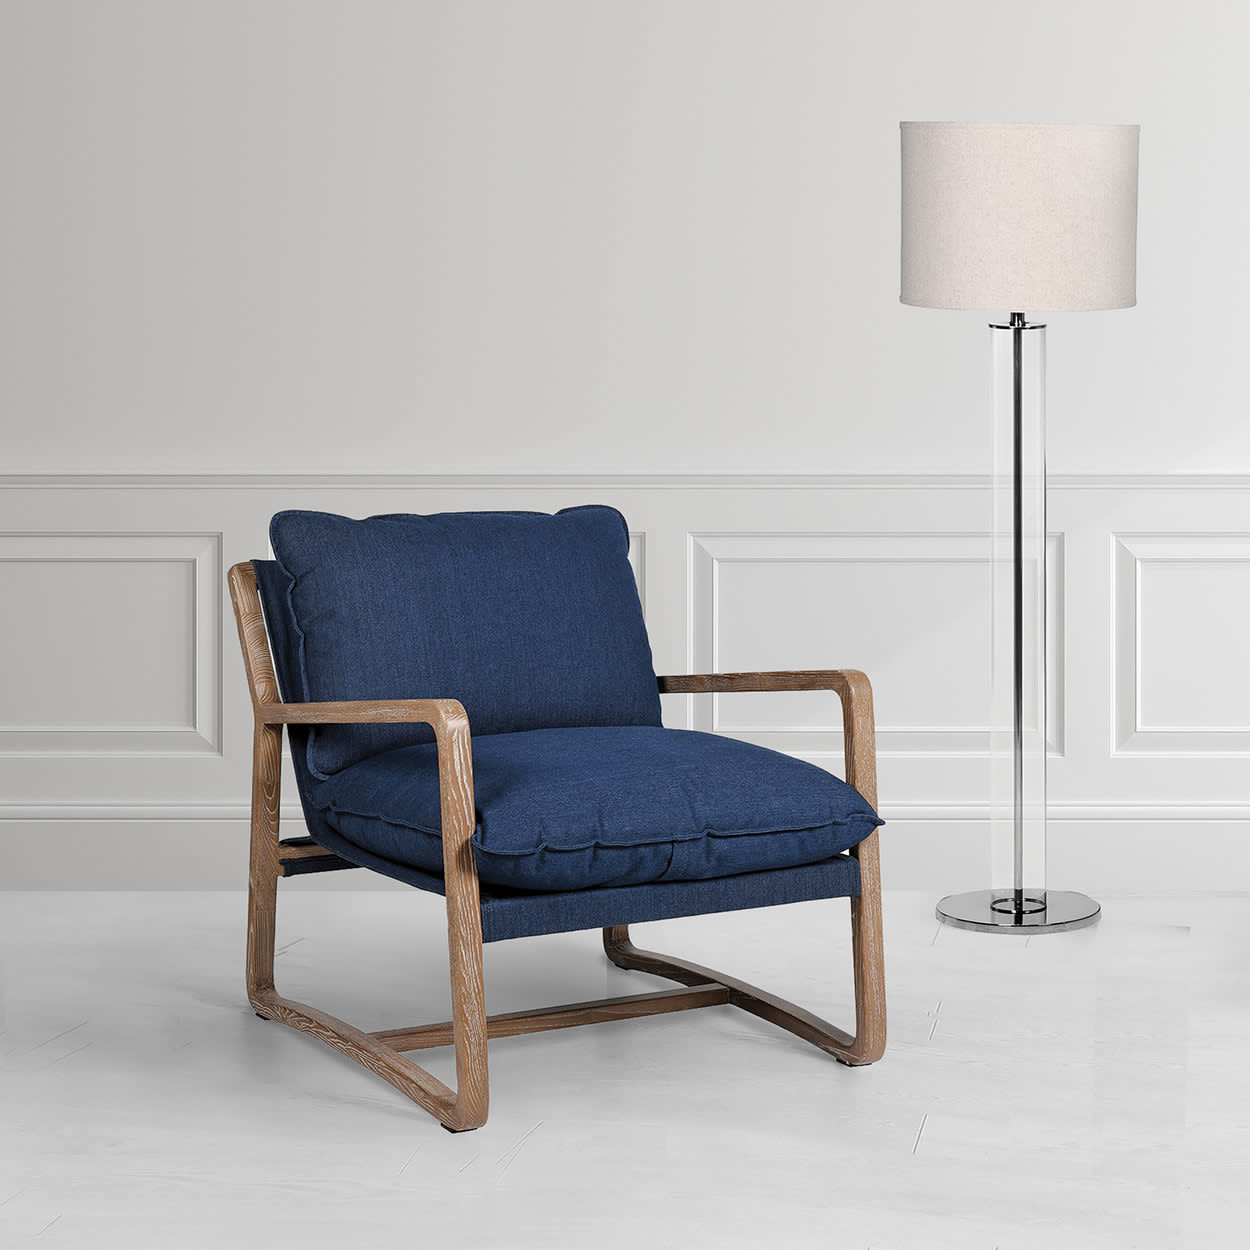 Blue Denim Armchair with Wooden Frame